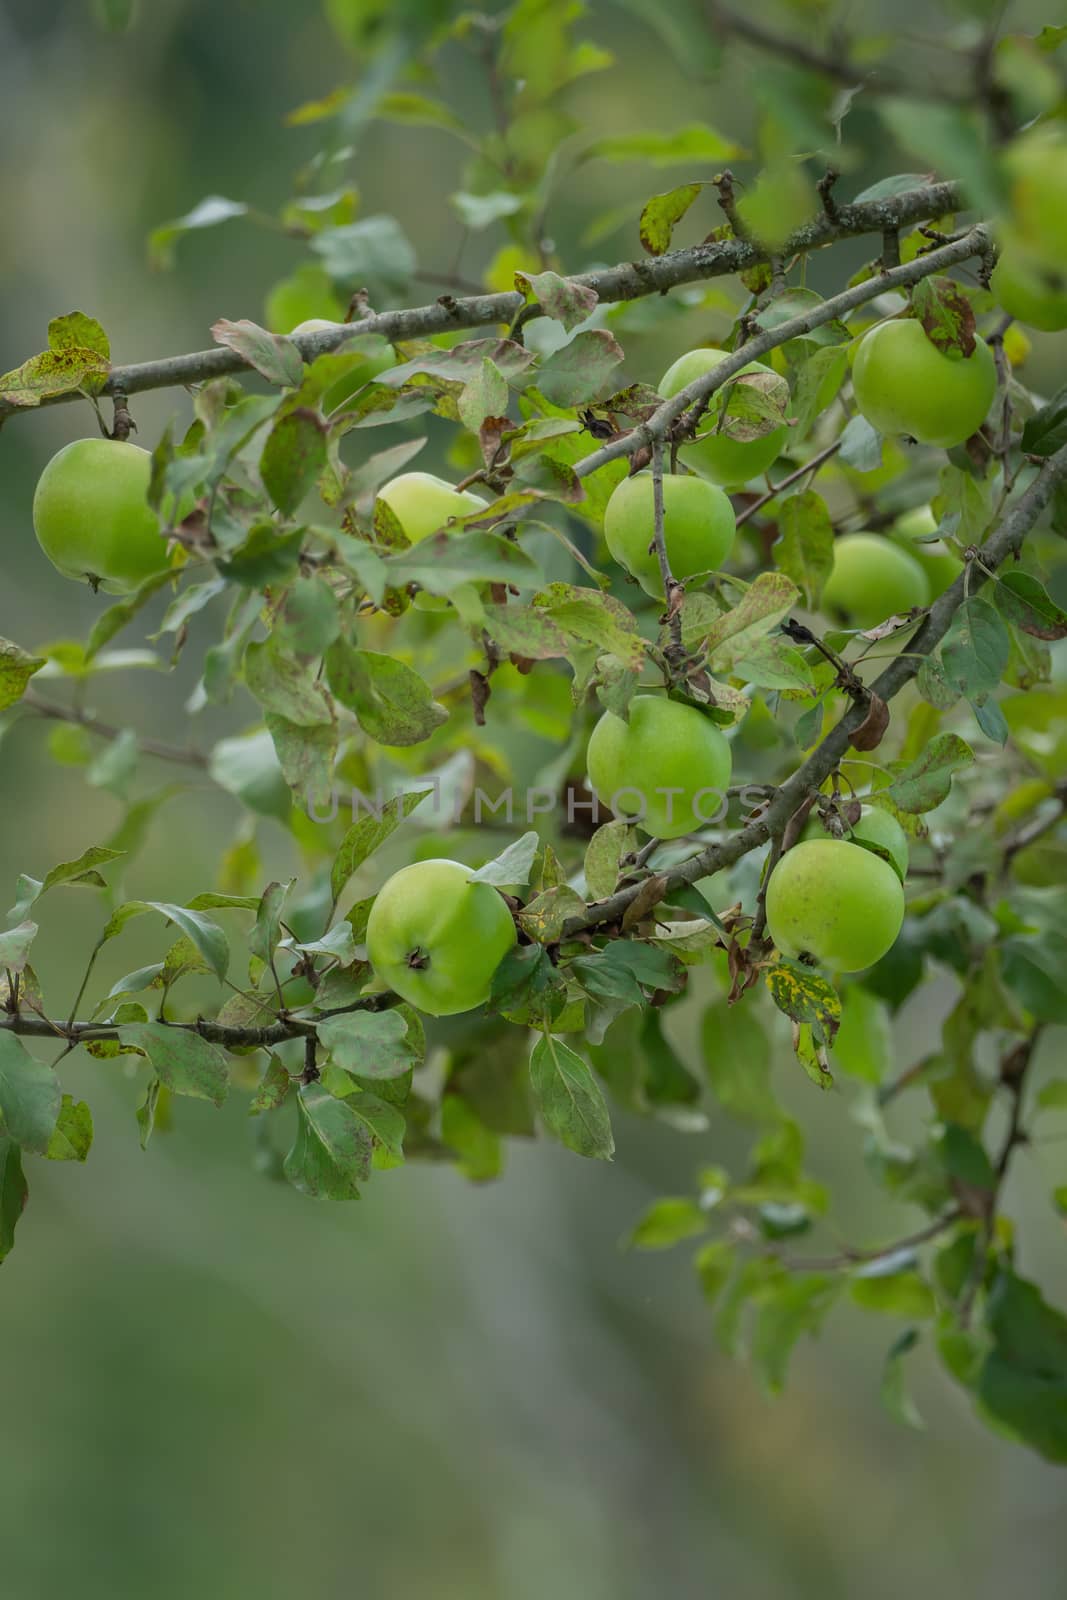 A branch full of ripe green apples by sandra_fotodesign